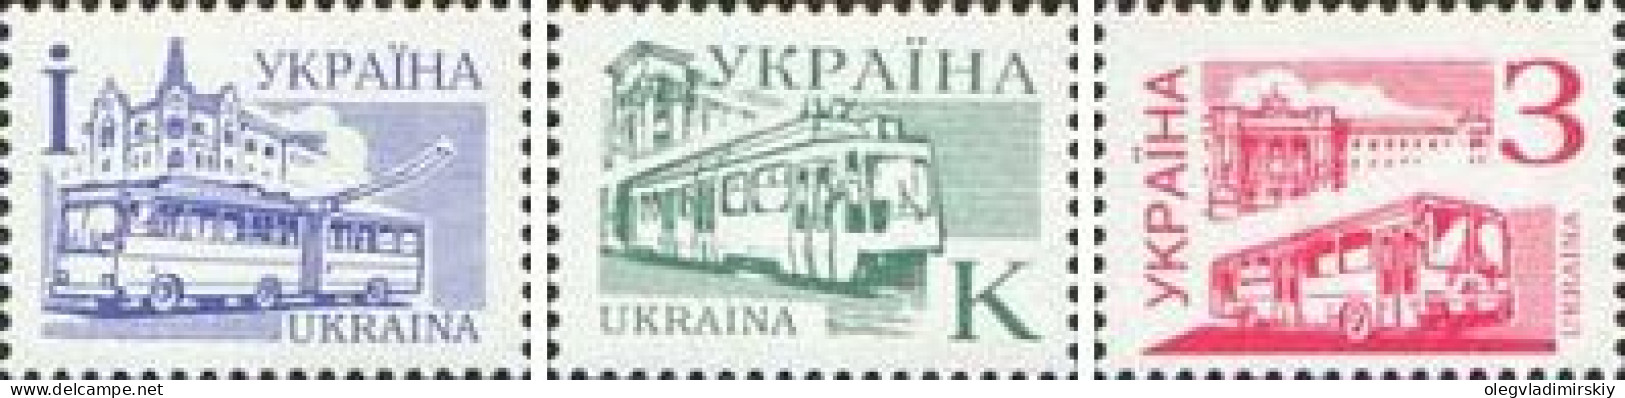 Ukraine 1995 Definitives City Transport Tramway Bus Trolleybus Set Of 3 Stamps MNH - Busses